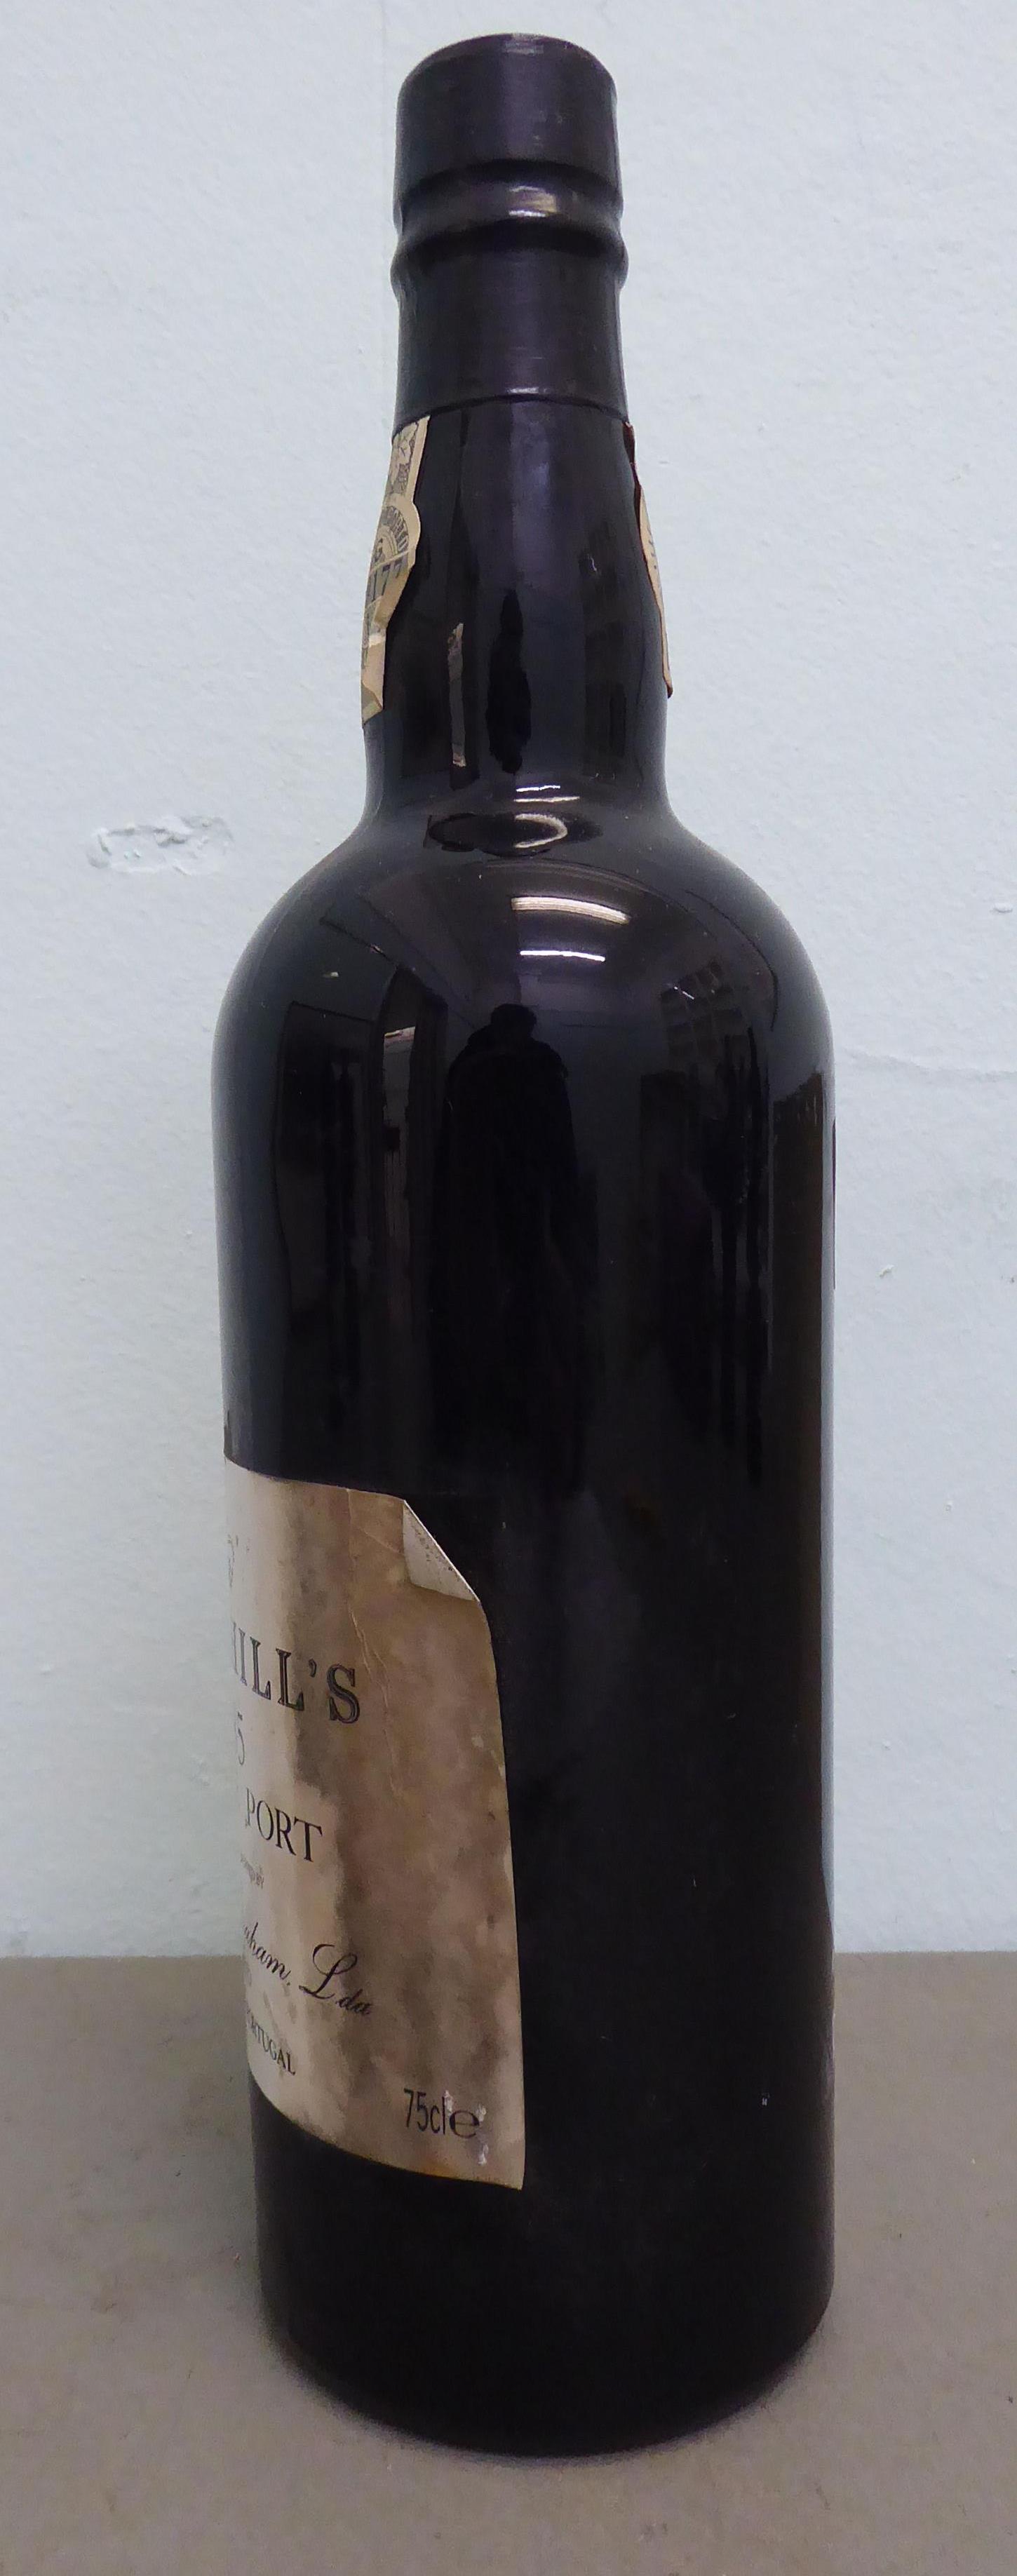 A bottle of Churchill's vintage Port 1985 - Image 3 of 3